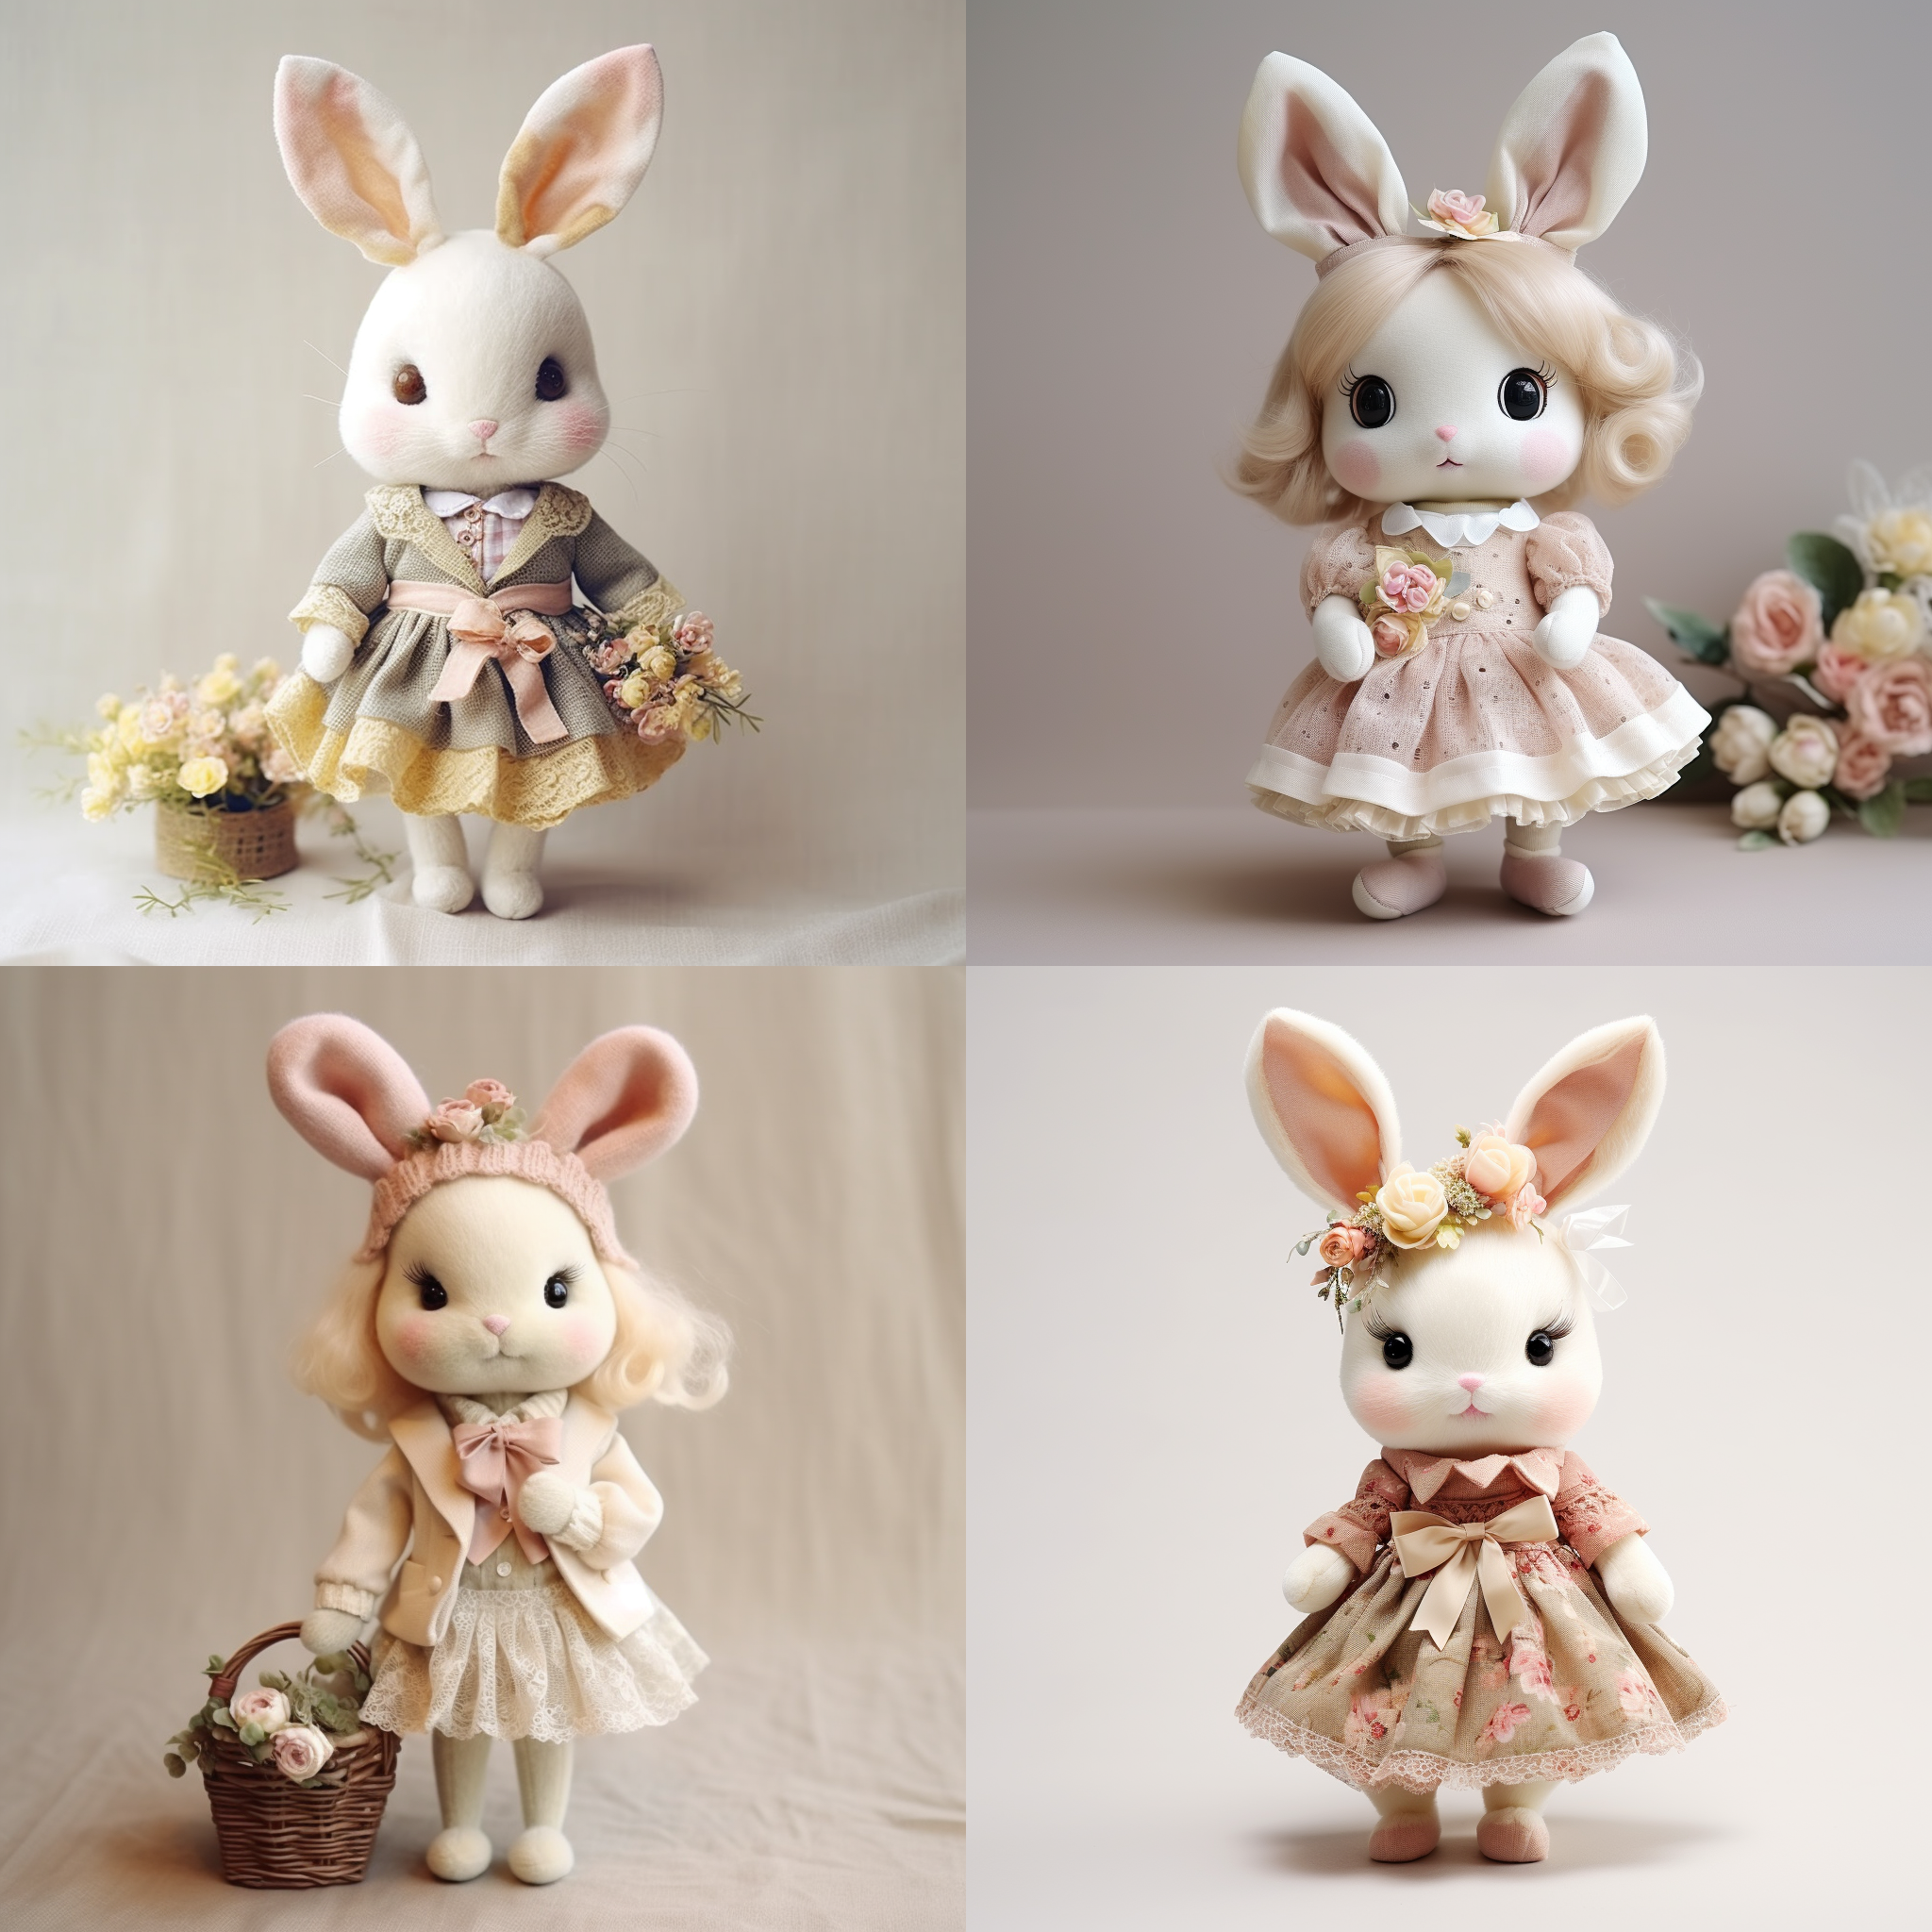 stevenlin9136_Cute_bunny_doll_plush_doll_wearing_skirt_7b90ce7a-518b-4d51-9c33-5da88c60801c.png